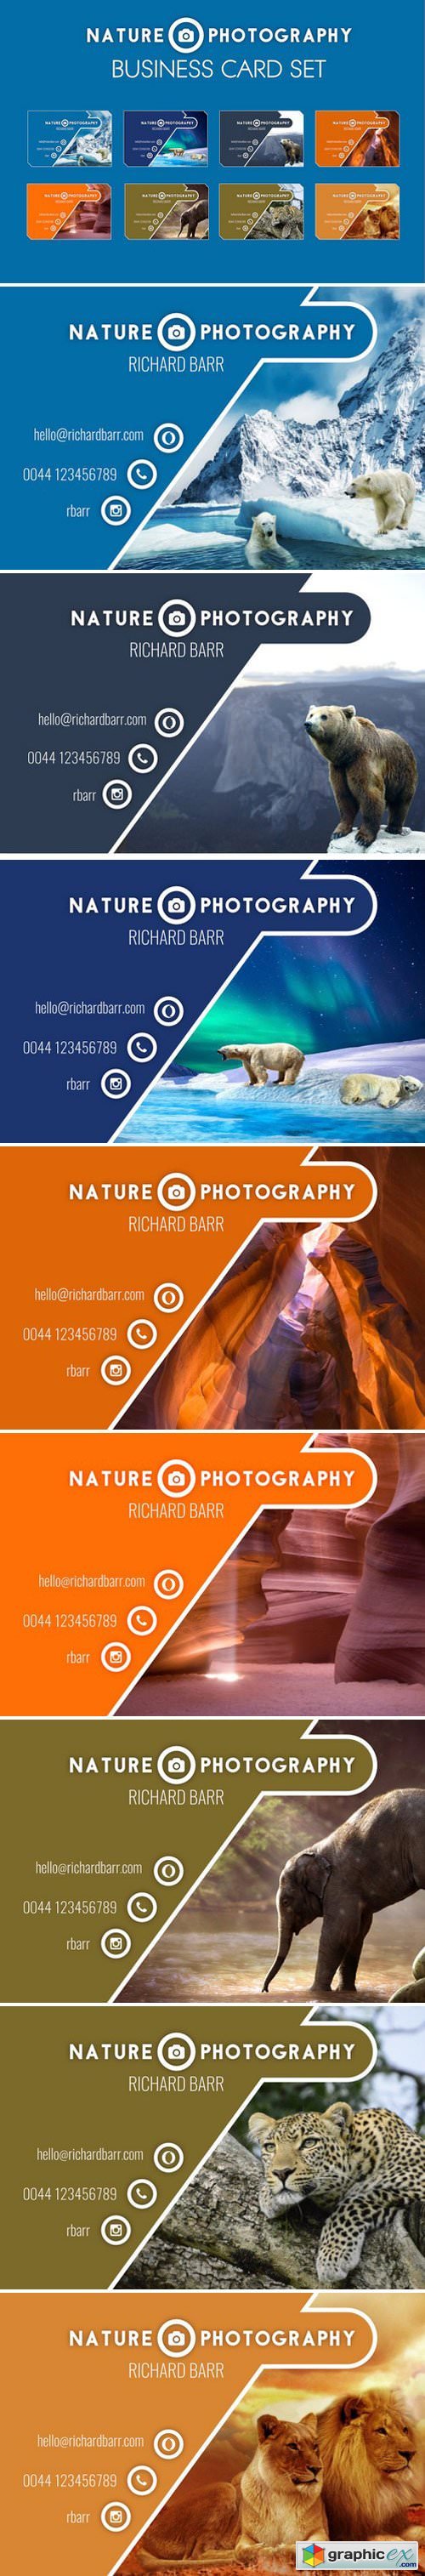 Nature Photography Business Card Set